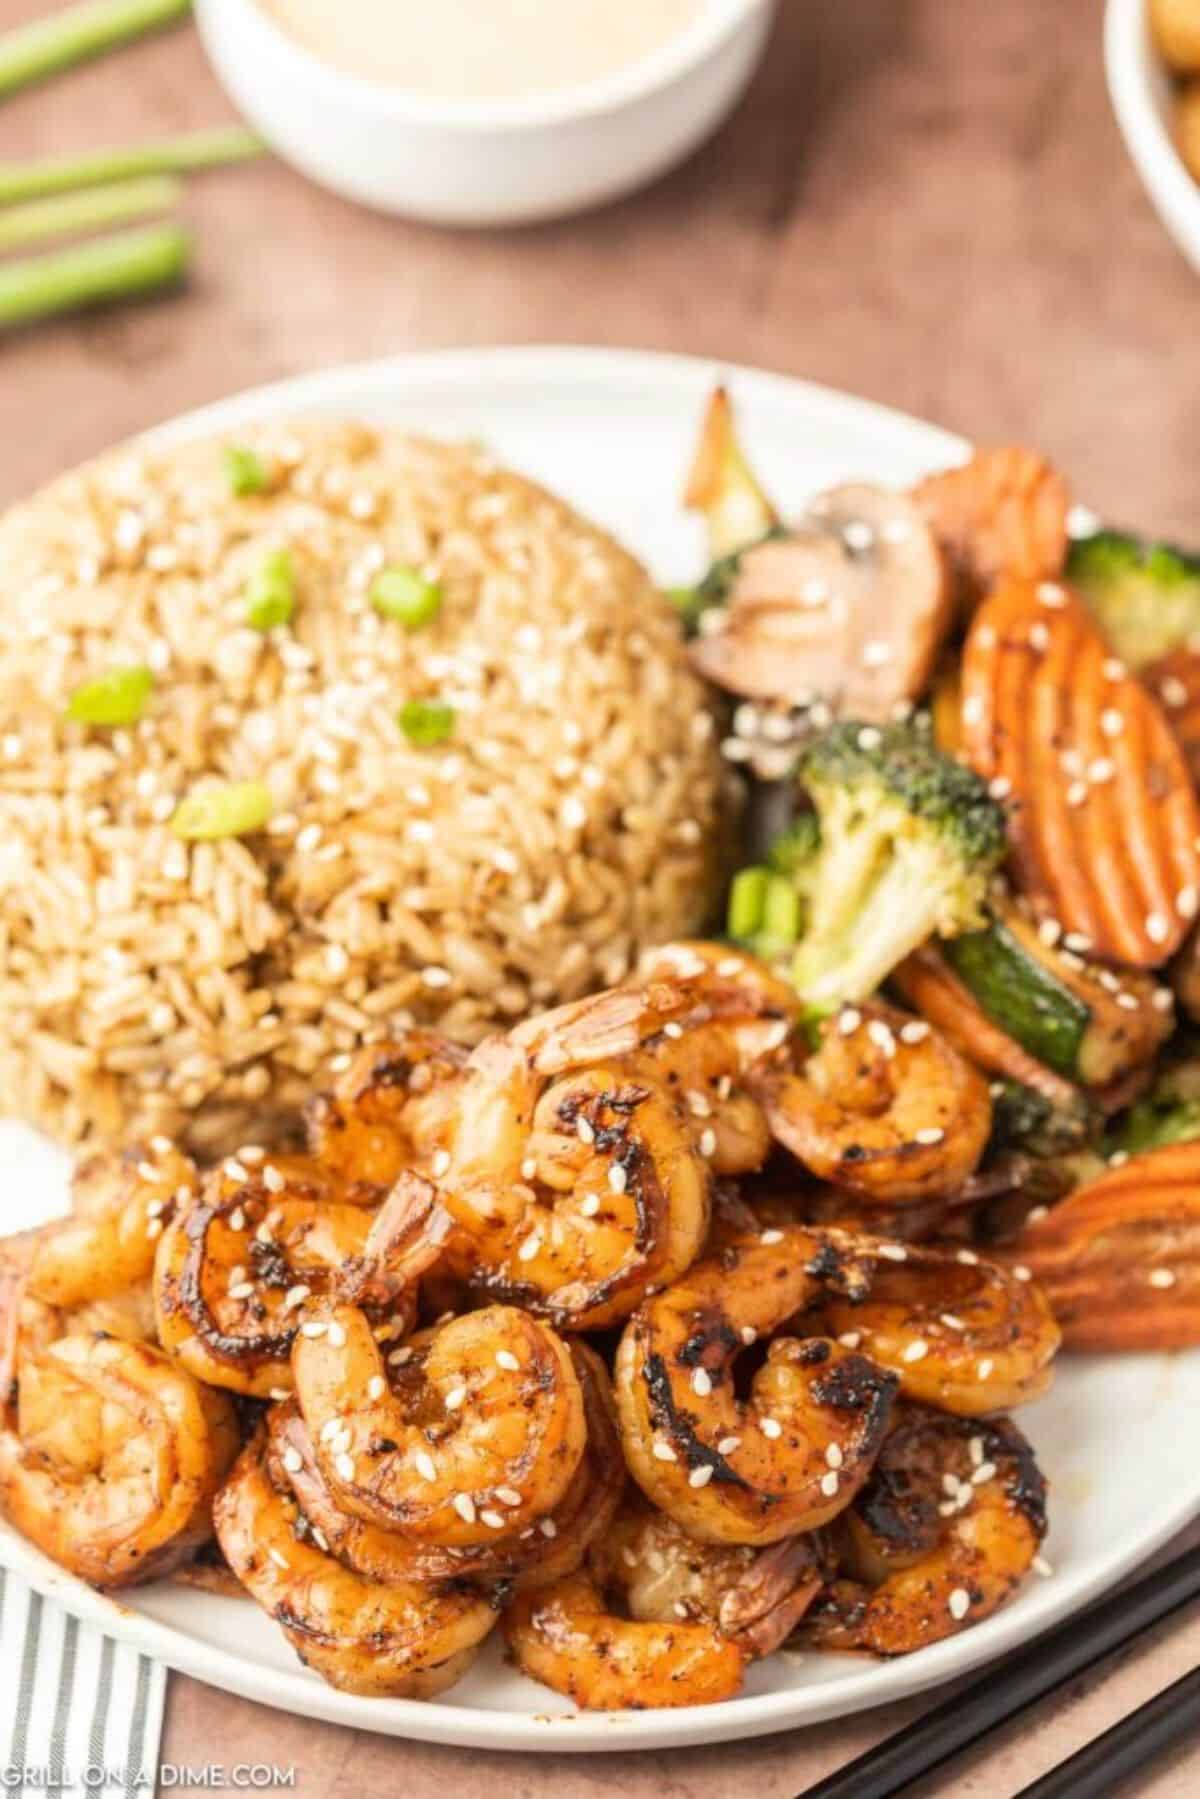 Blackstone hibachi shrimp with veggies and rice on a white plate.